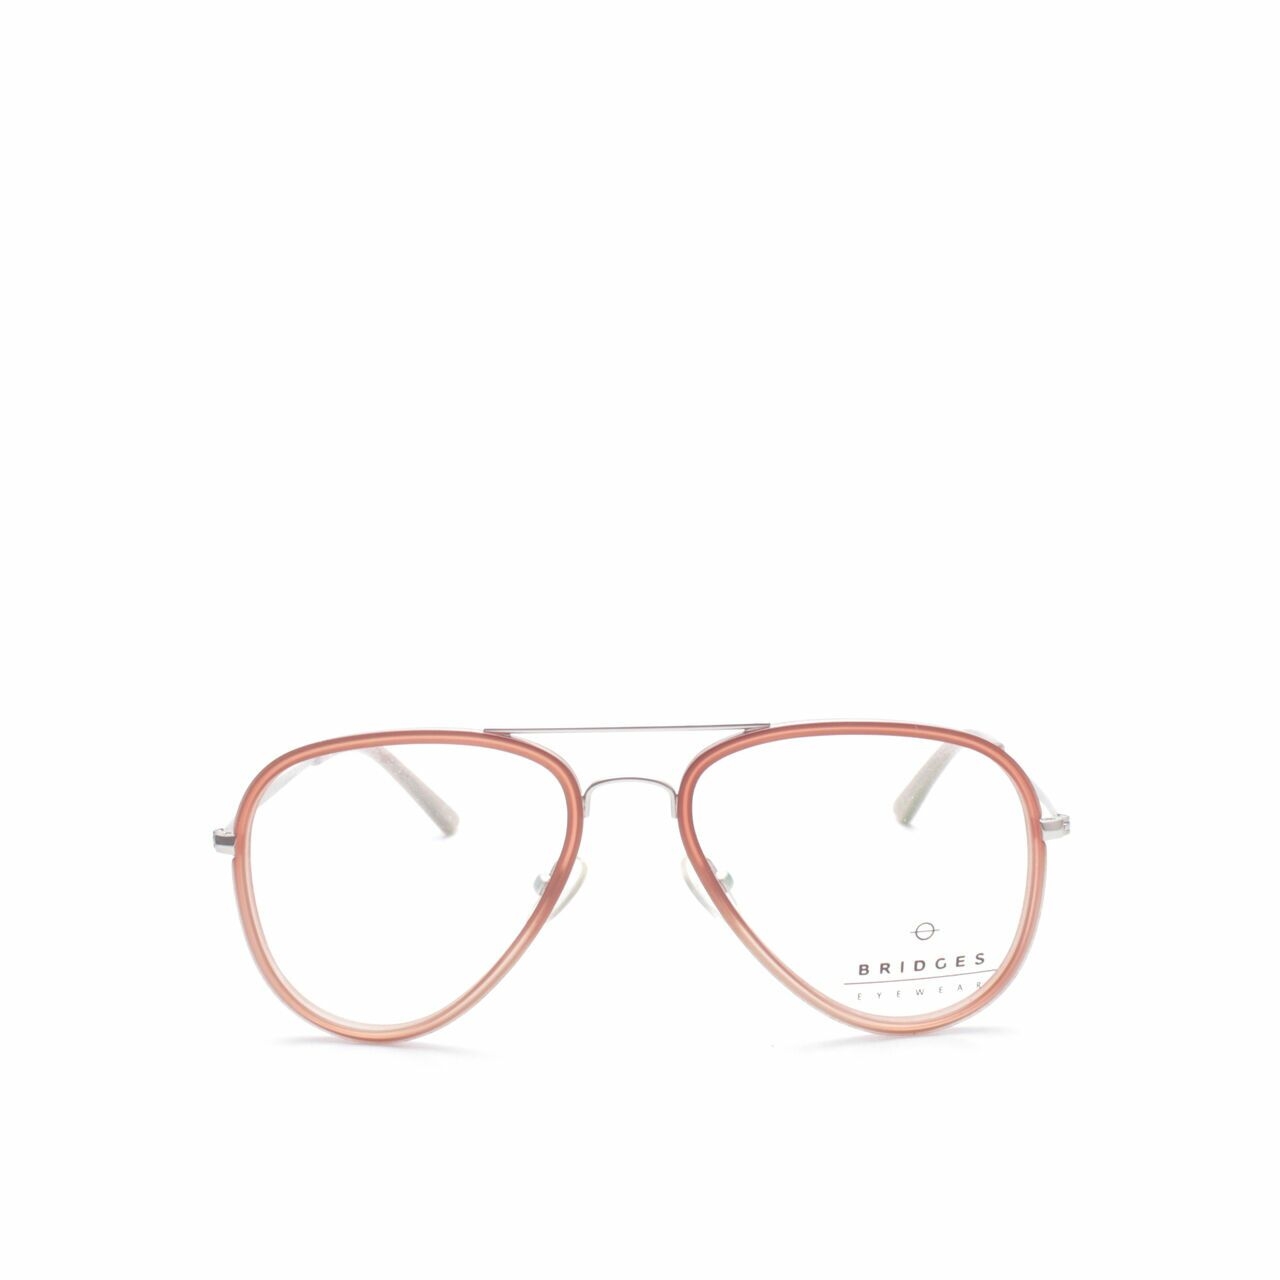 Bridges Silver/Pink Glasses